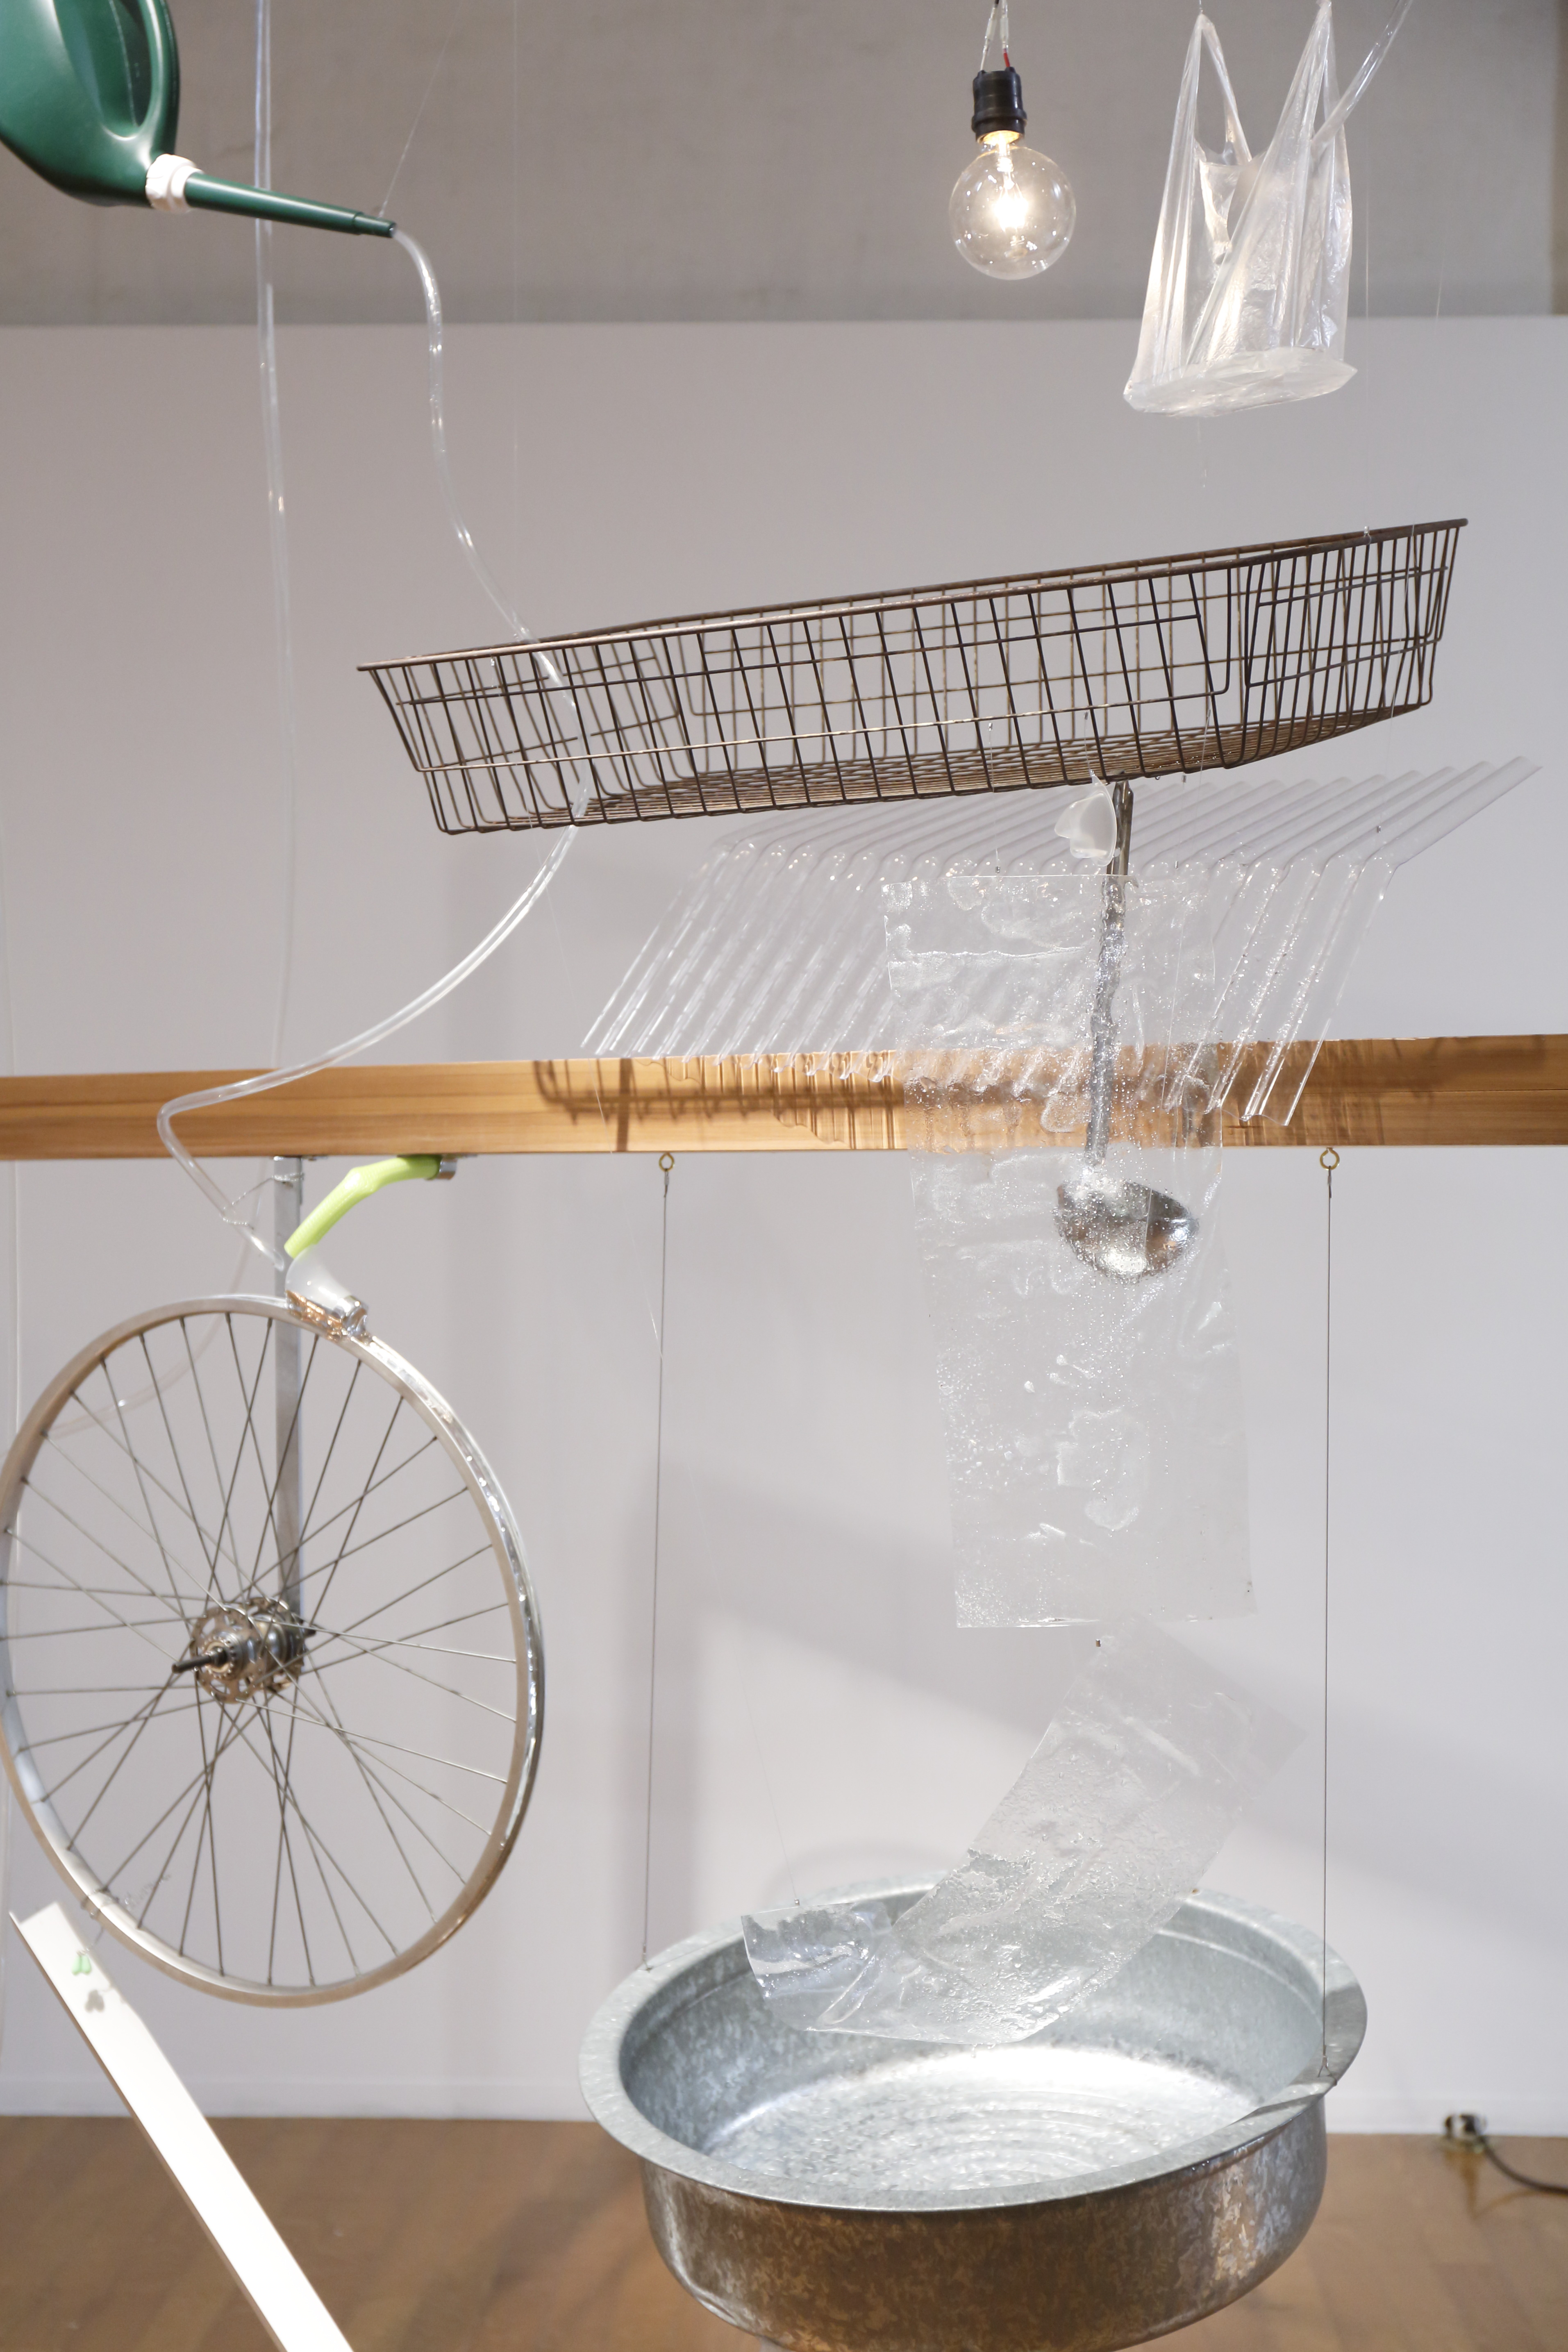 Image2: Moré Moré (Leaky): The Falling Water Given #1-3, Yuko MOHRI, Nissan Art Award 2015. Photo: Keizo Kioku